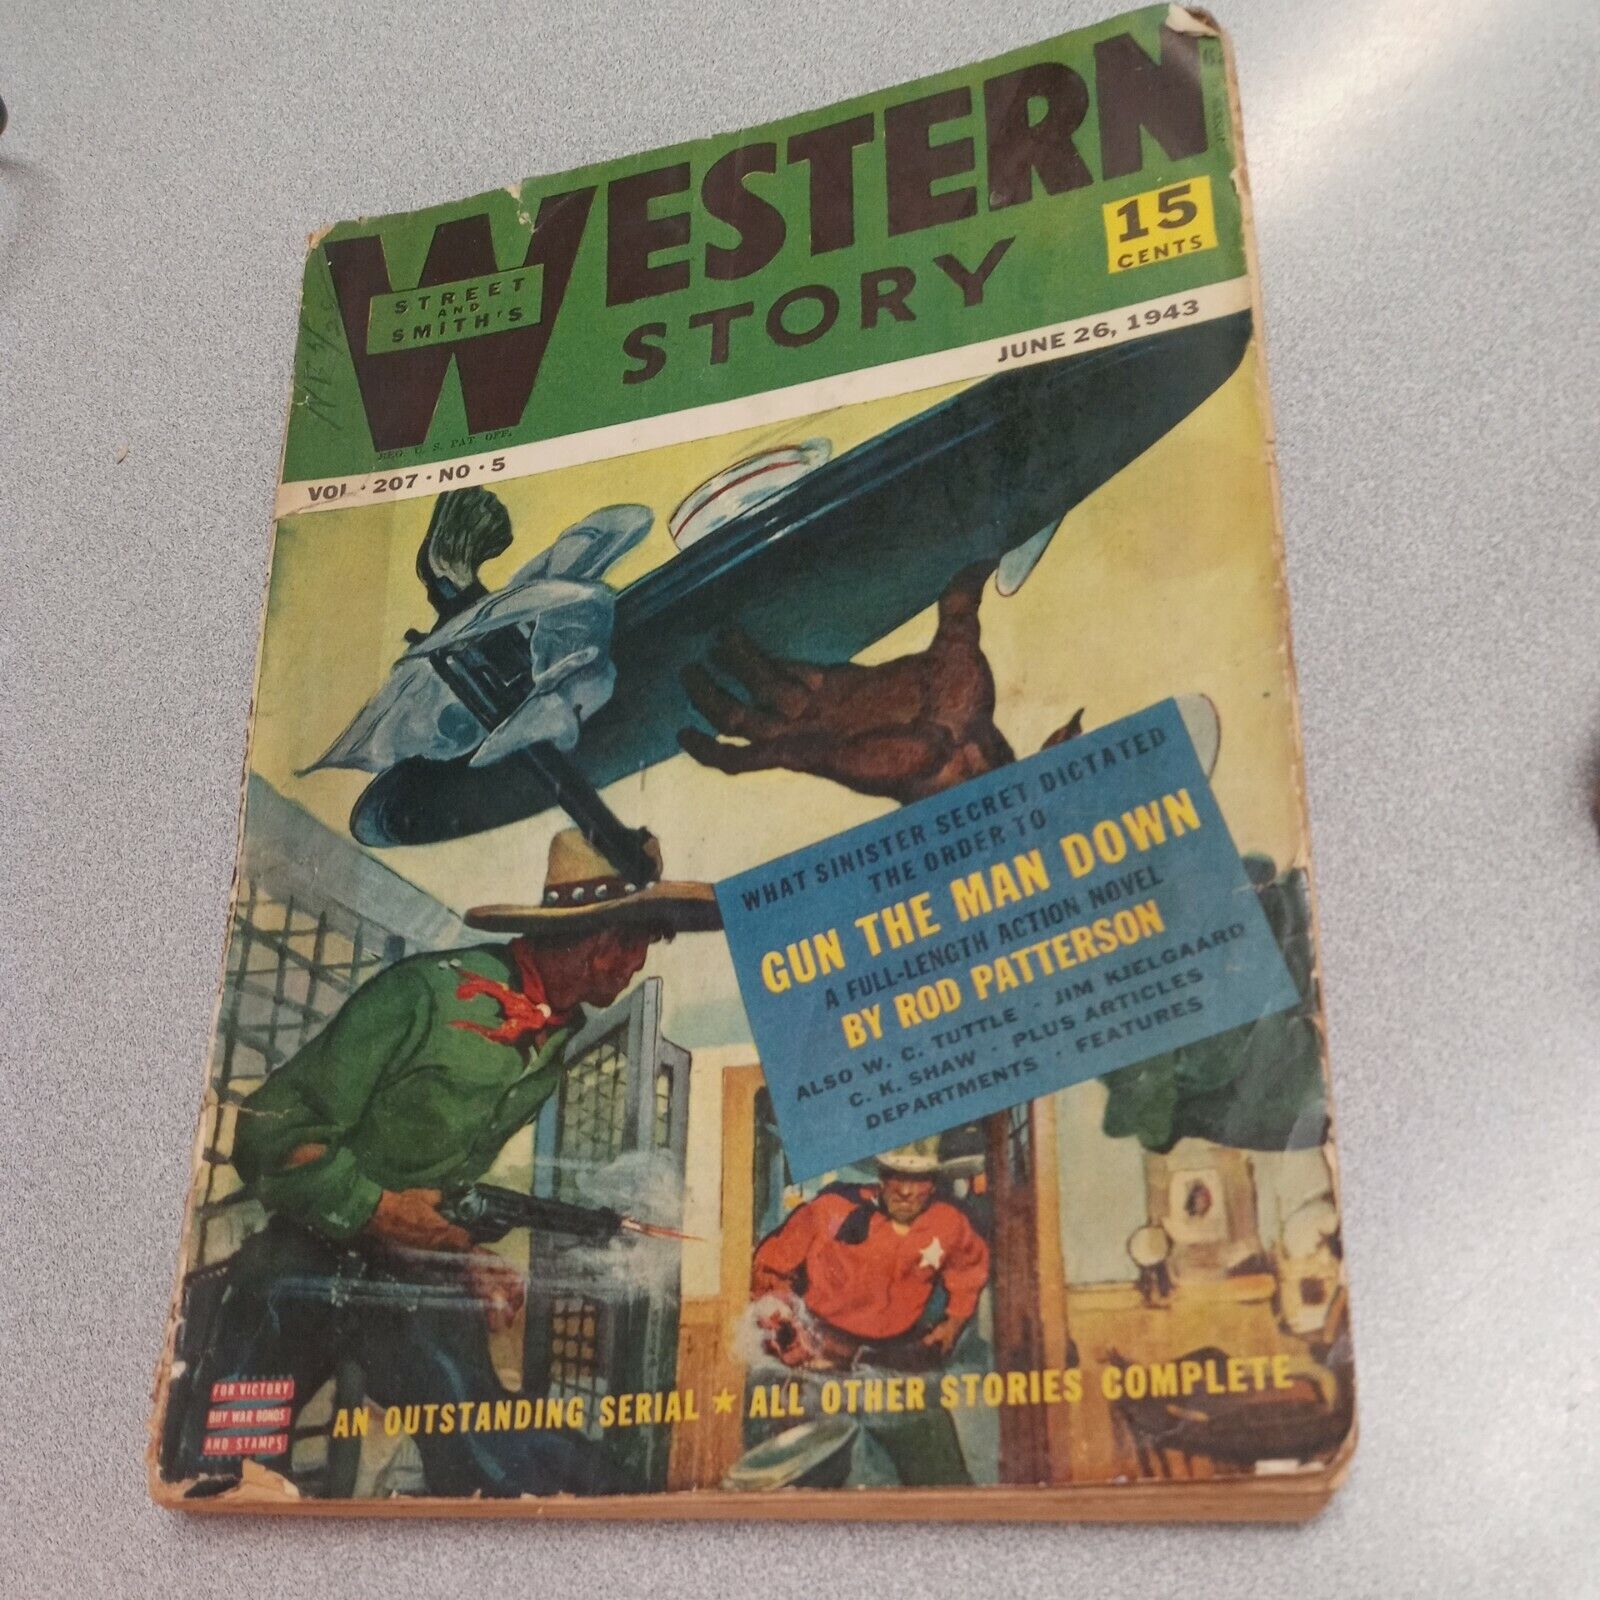 Western Story Magazine Pulp 1st Series jun 26 1943 #Vol. 207 #5 golden age book